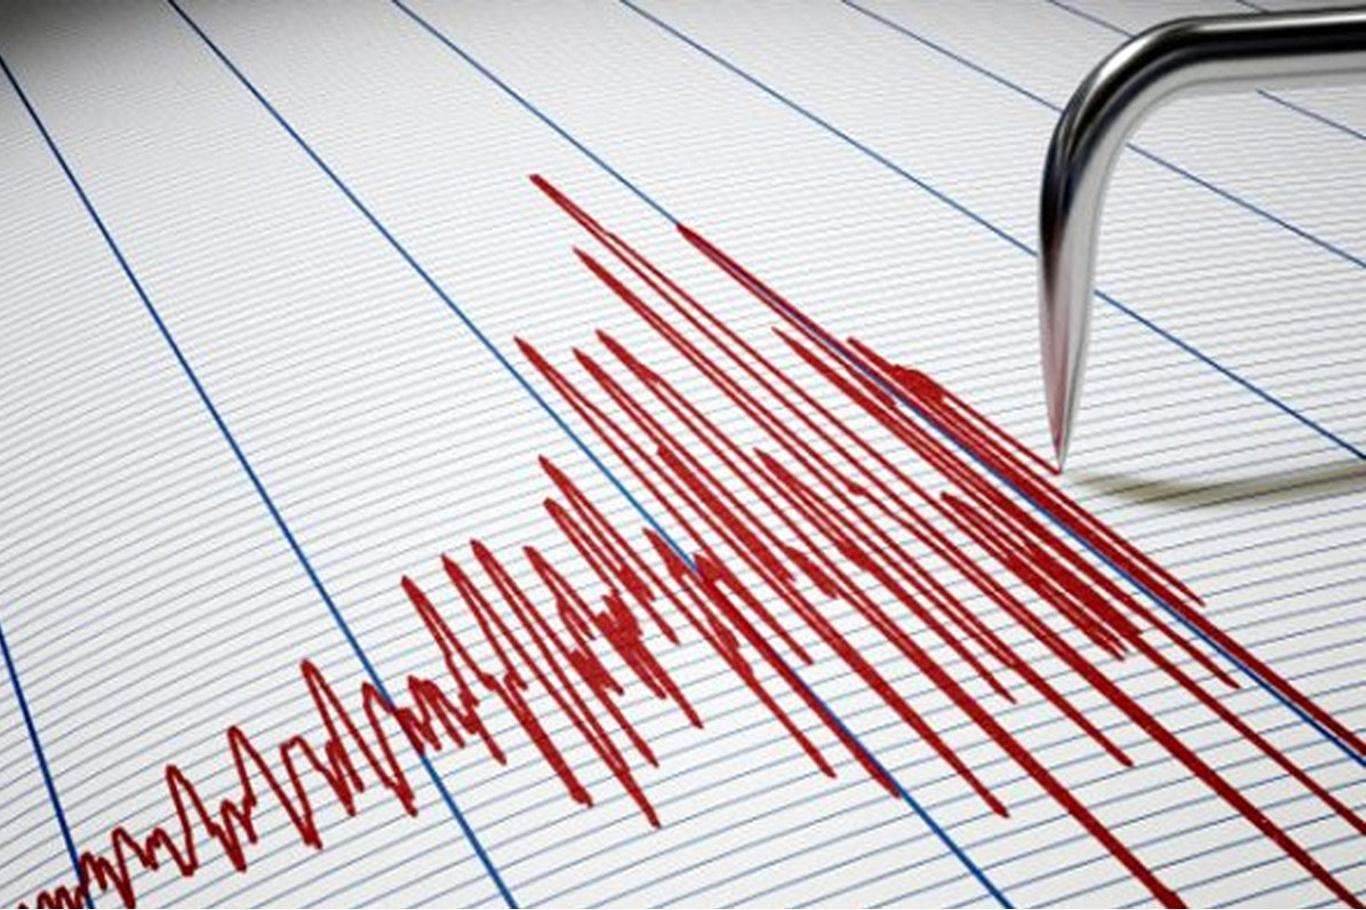 4.2 magnitude earthquake occurs off Greece’s Cyclades Islands in Aegean Sea